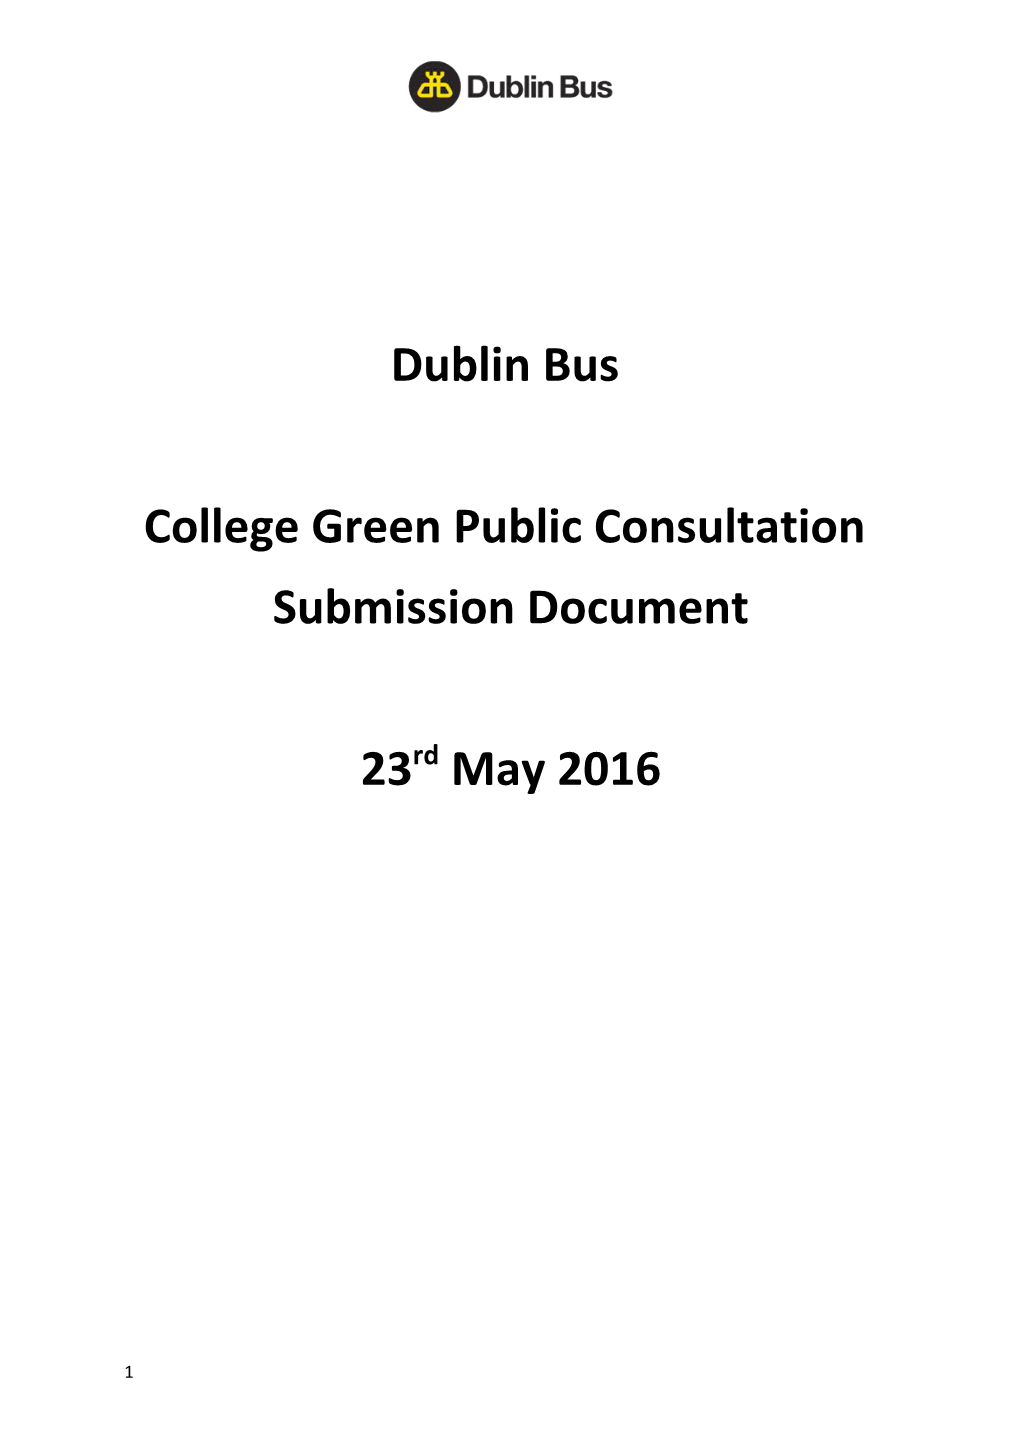 College Green Public Consultation